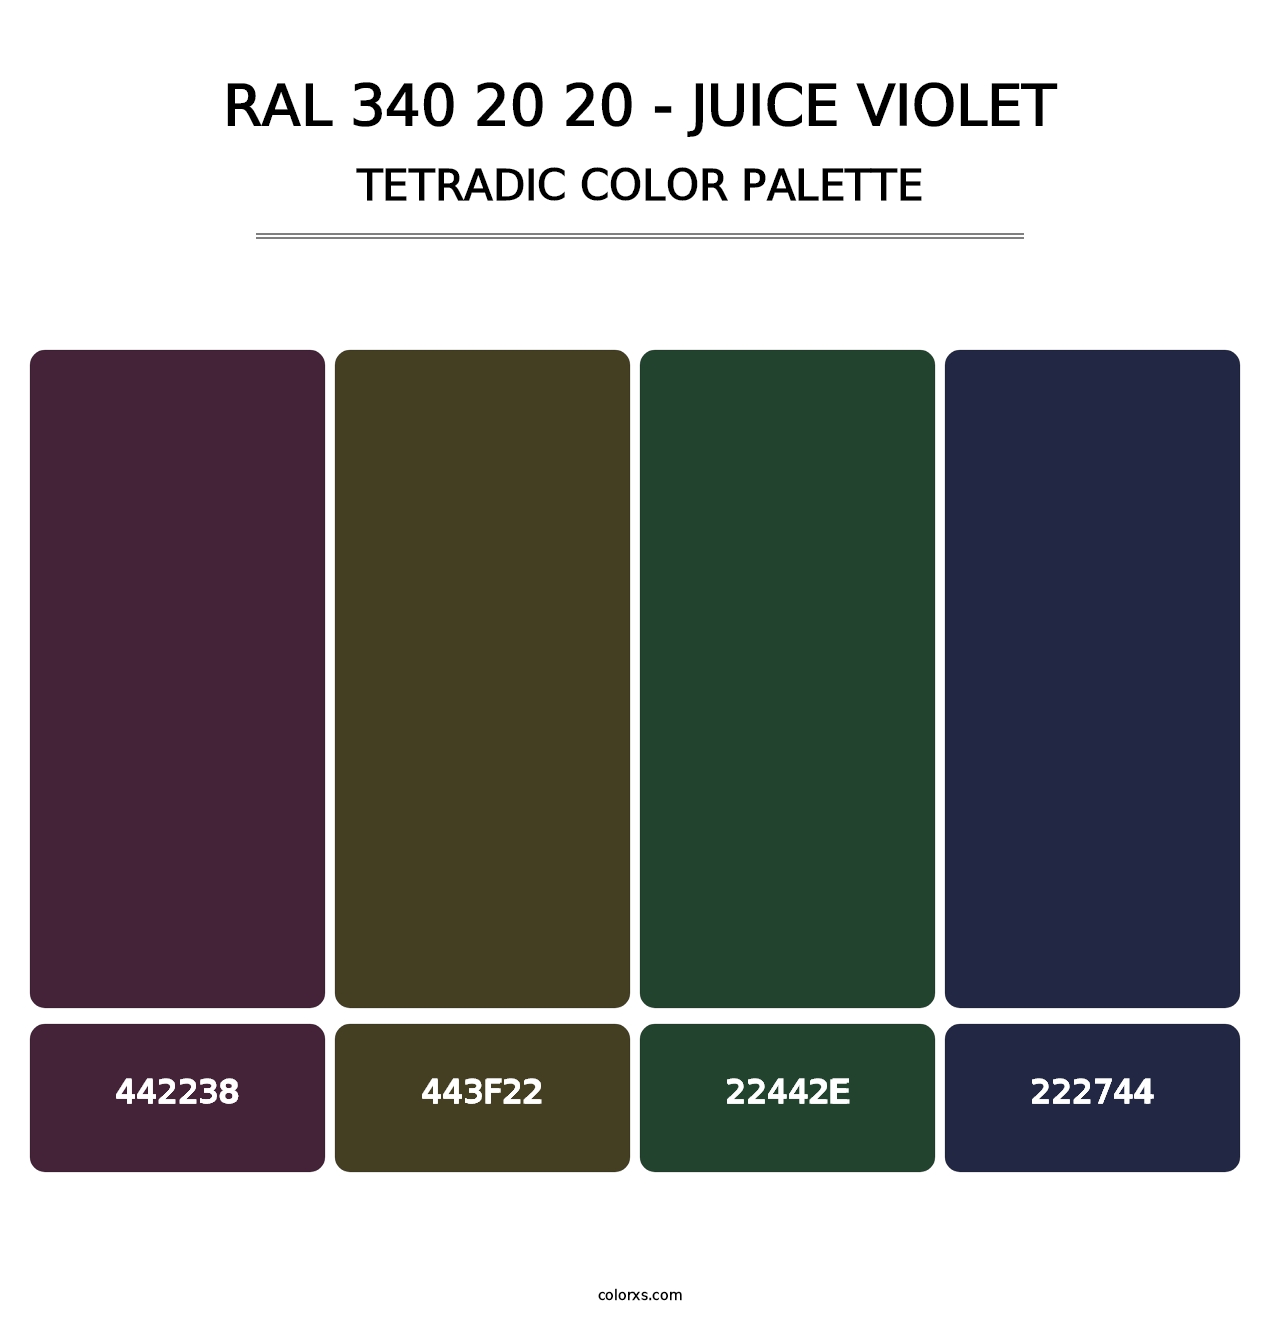 RAL 340 20 20 - Juice Violet - Tetradic Color Palette